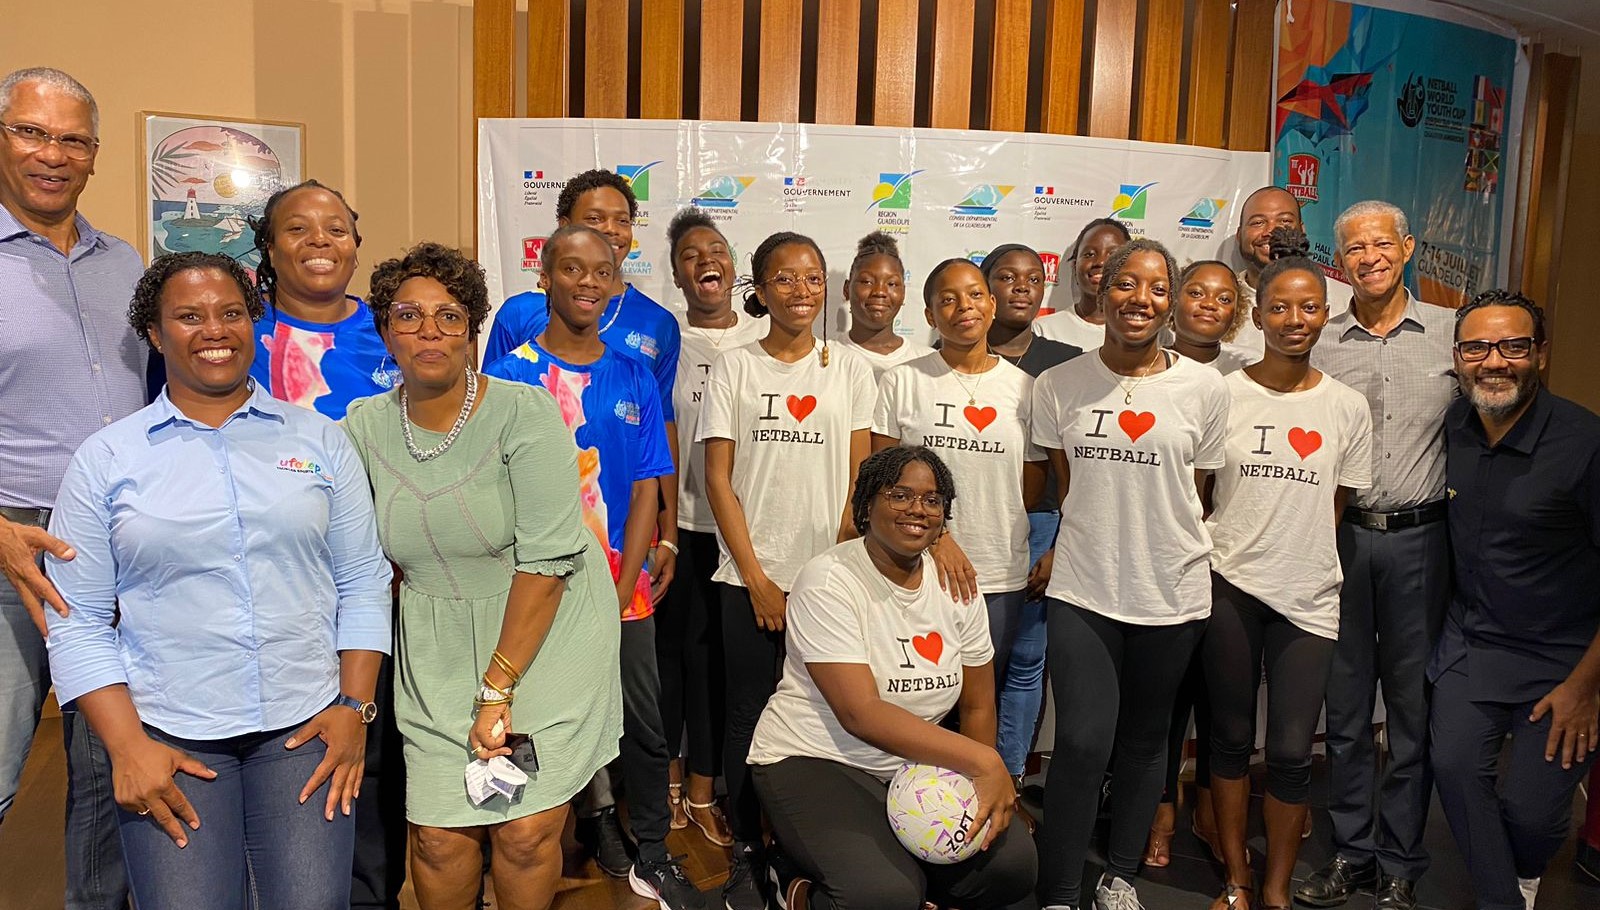     La Guadeloupe organise sa première compétition internationale de netball

